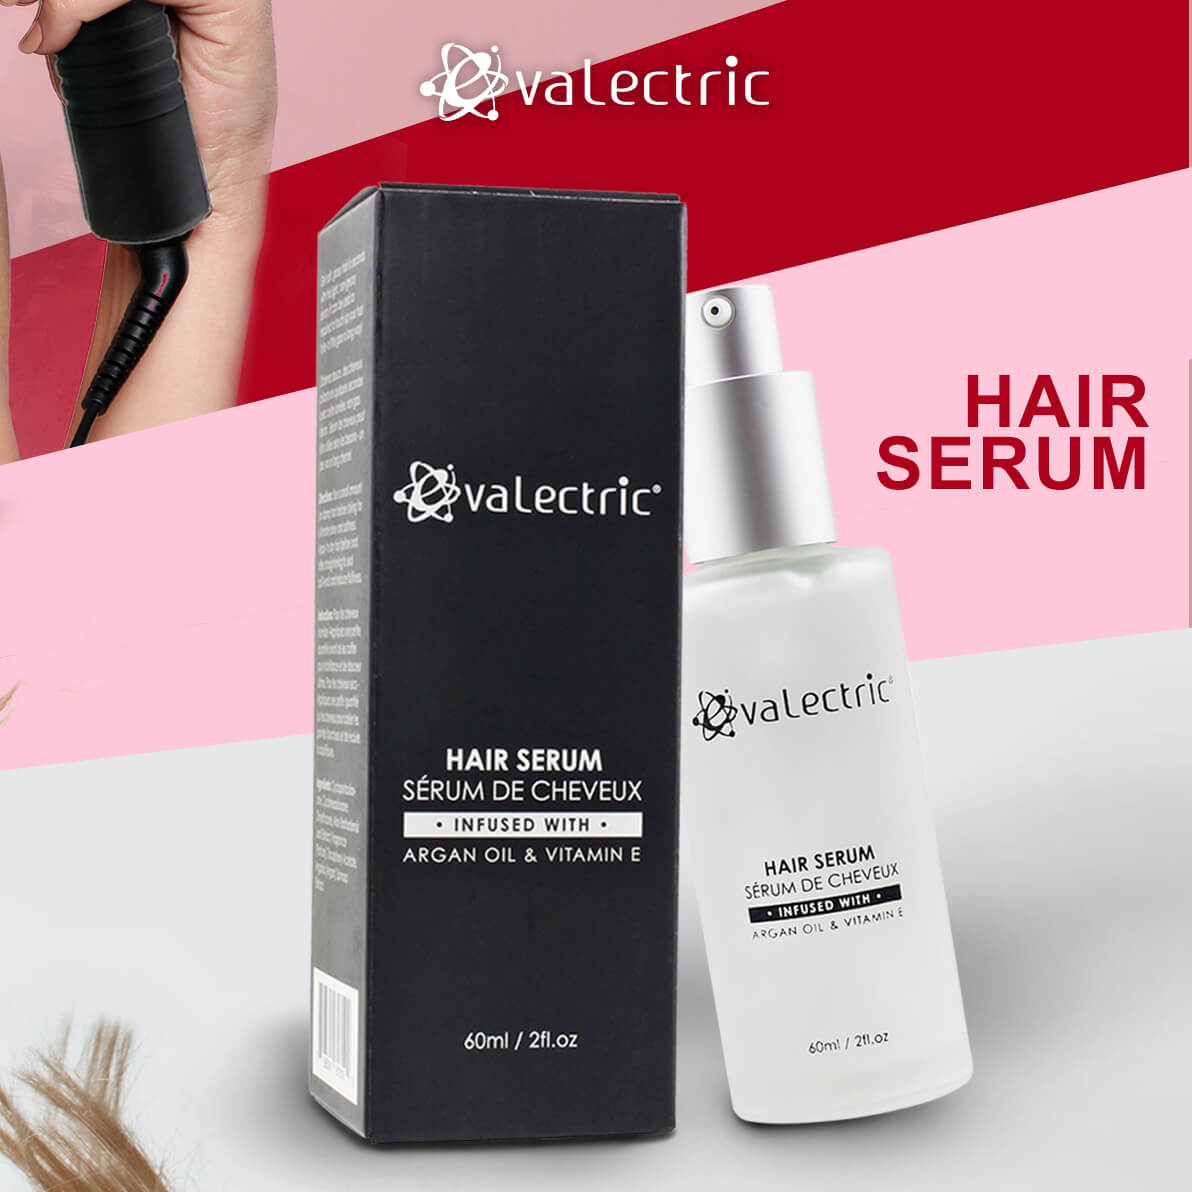 Evalectric Hair Serum